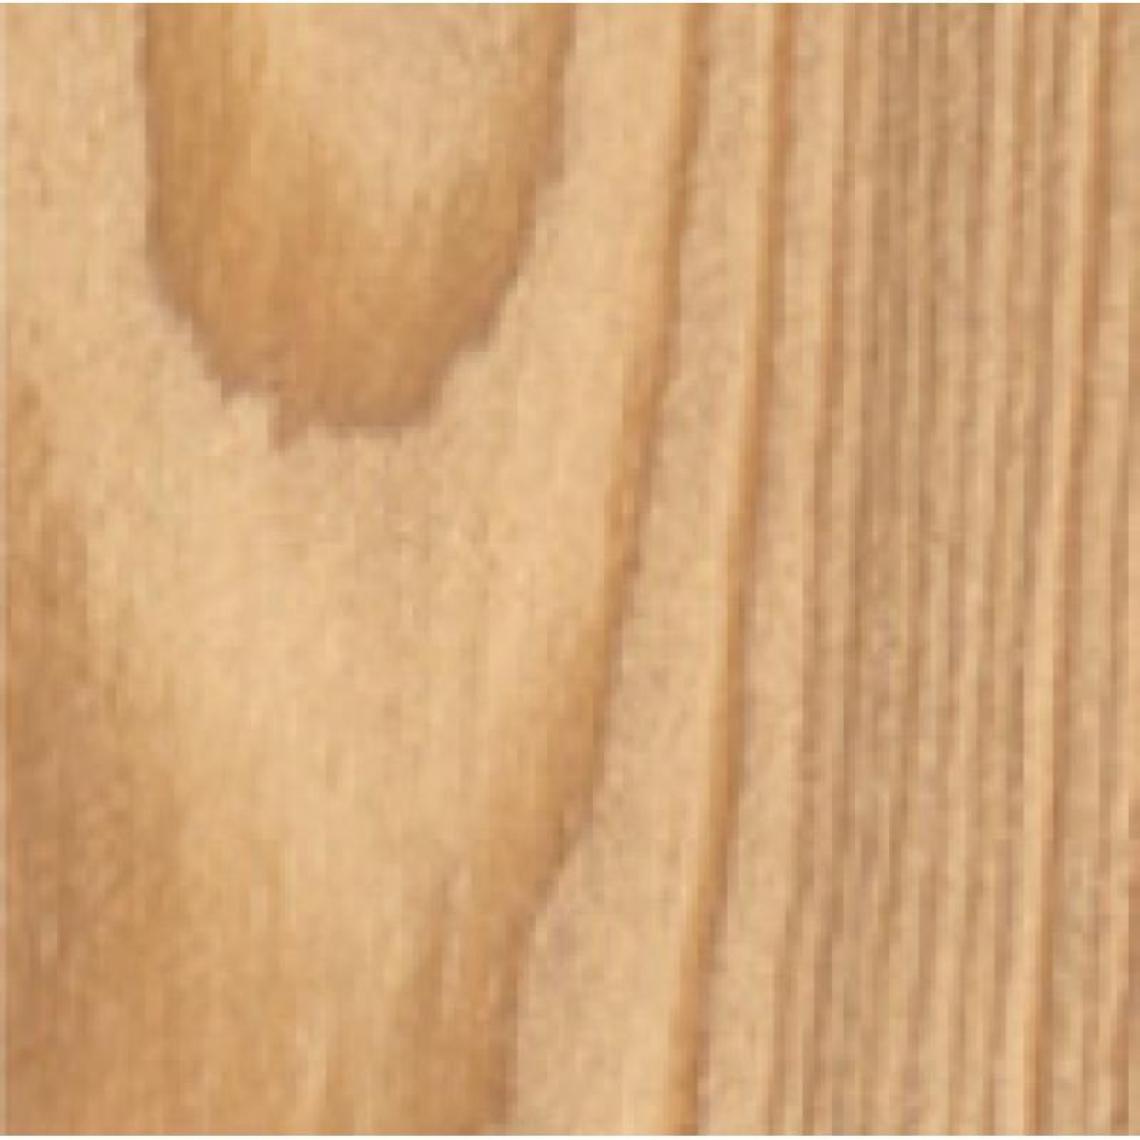 Blanchon - Lasures Aqua Polyuréthane Tech-Woo, teinte chêne clair bidon de 5 - Produit de finition pour bois